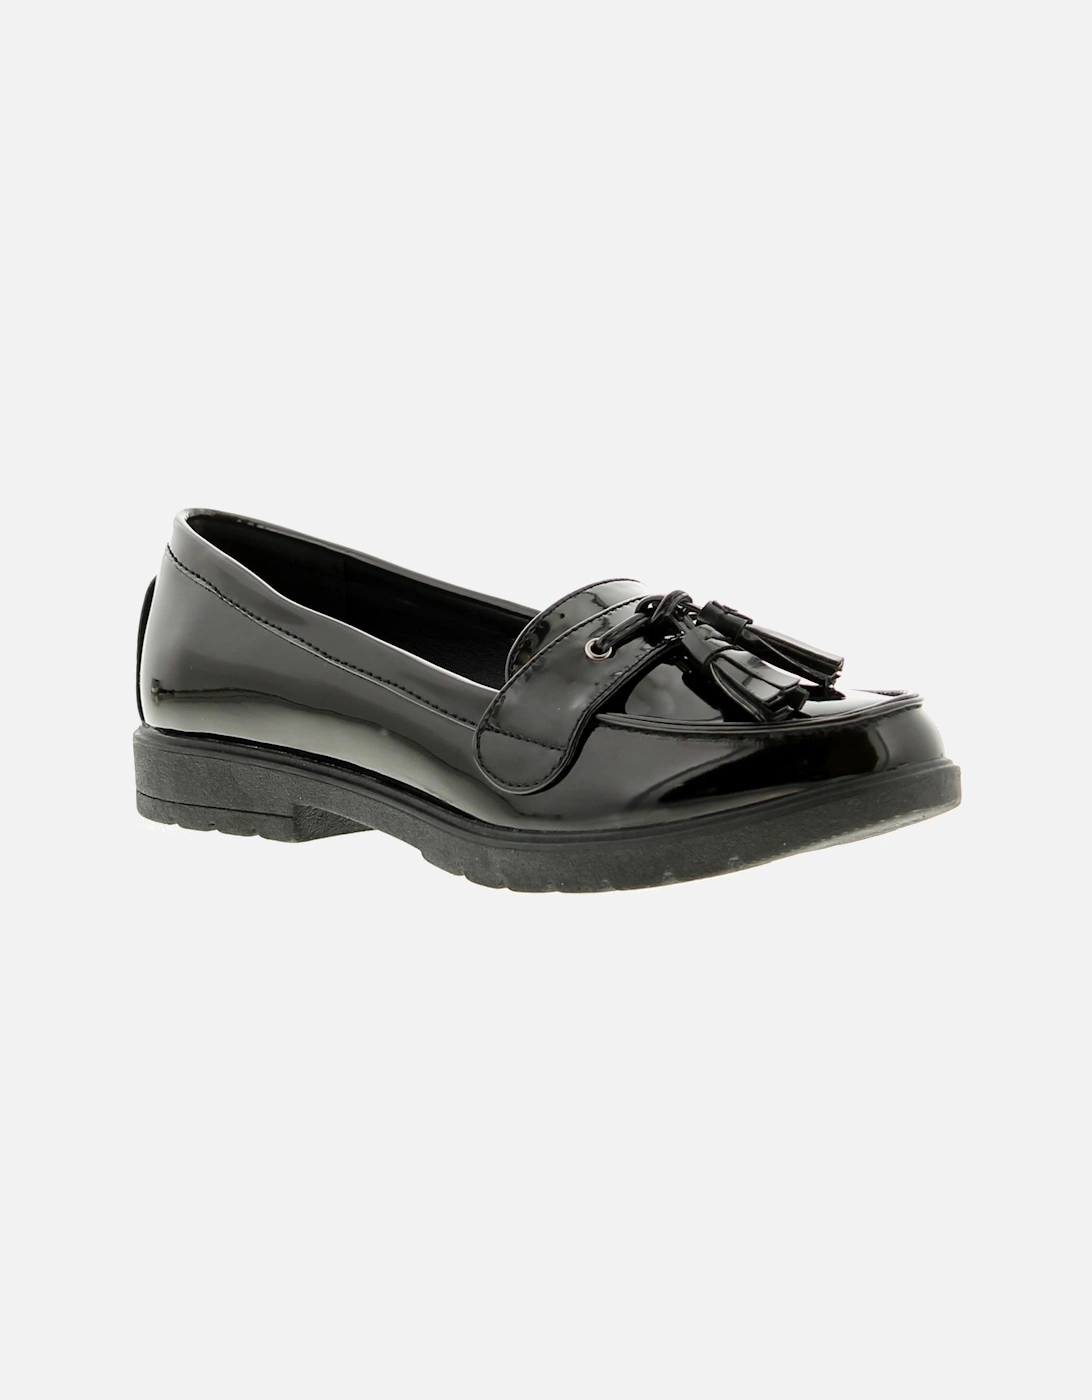 Womens Flat Shoes Kennedy Slip On black patent UK Size, 6 of 5